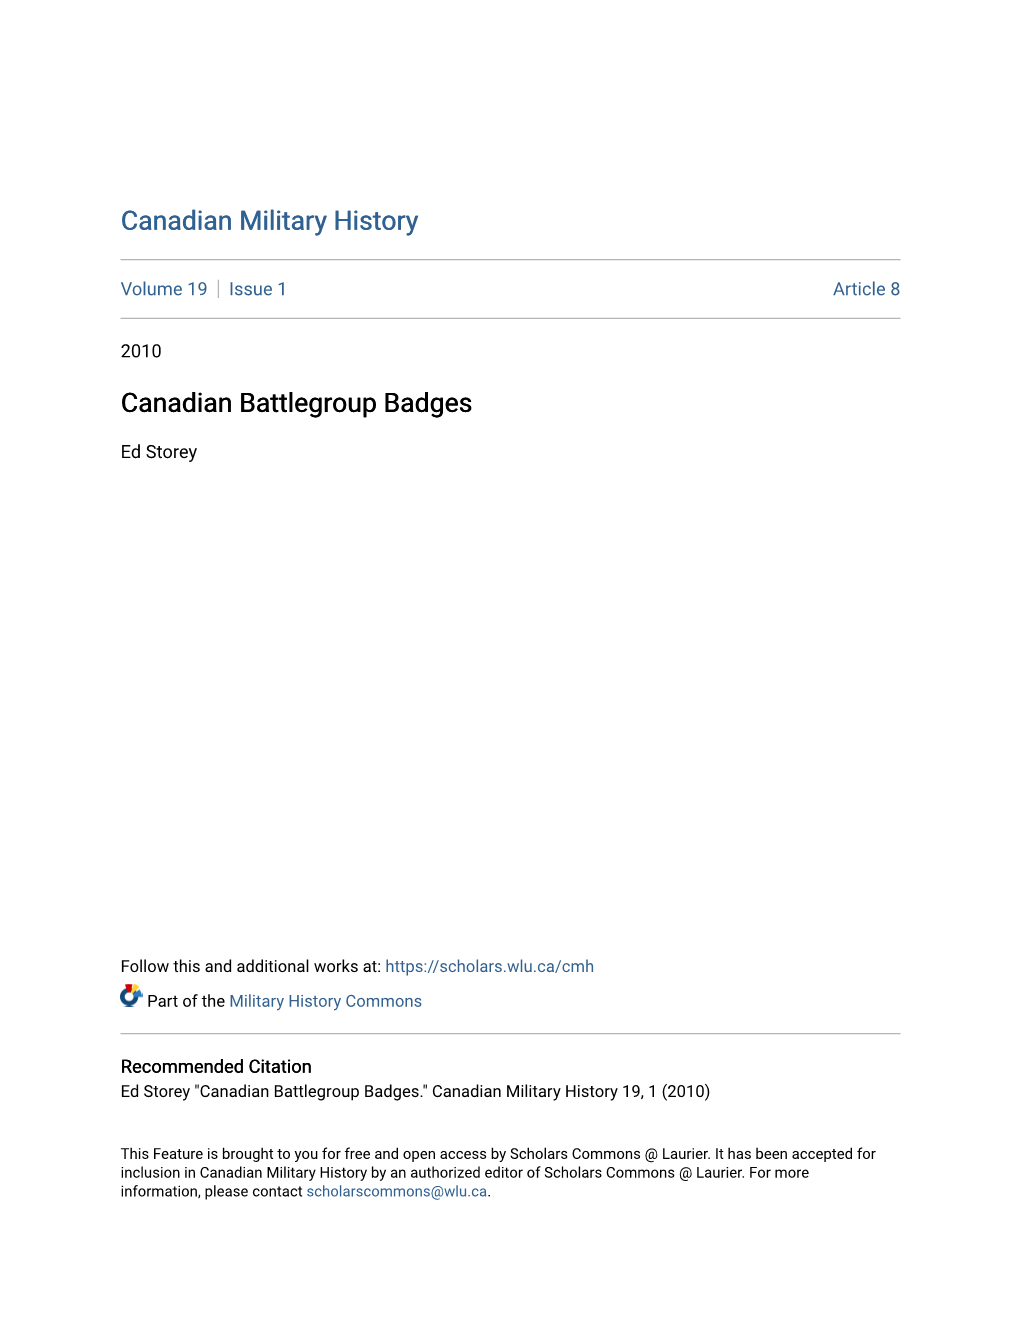 Canadian Battlegroup Badges